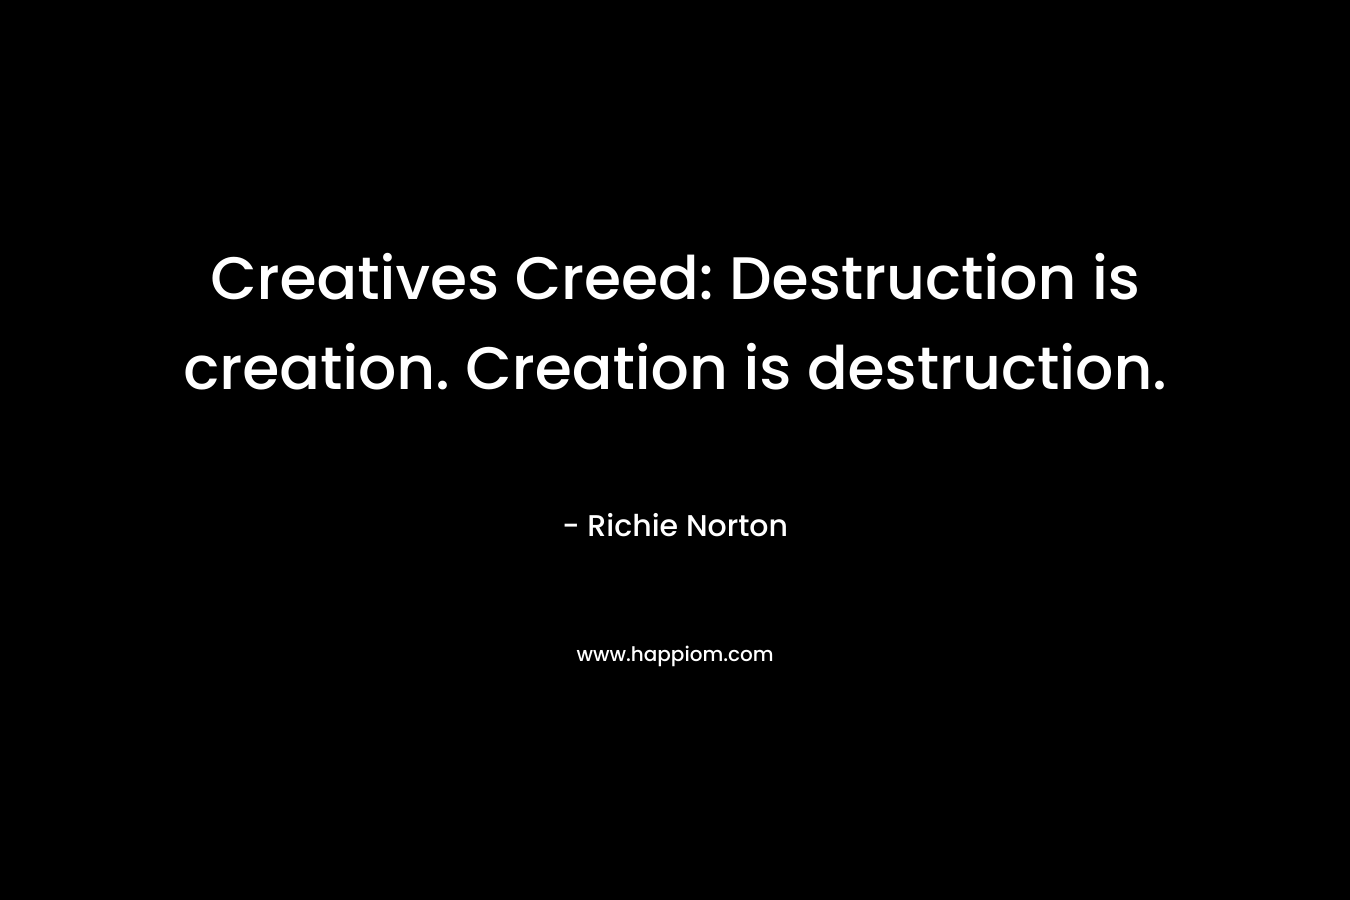 Creatives Creed: Destruction is creation. Creation is destruction.